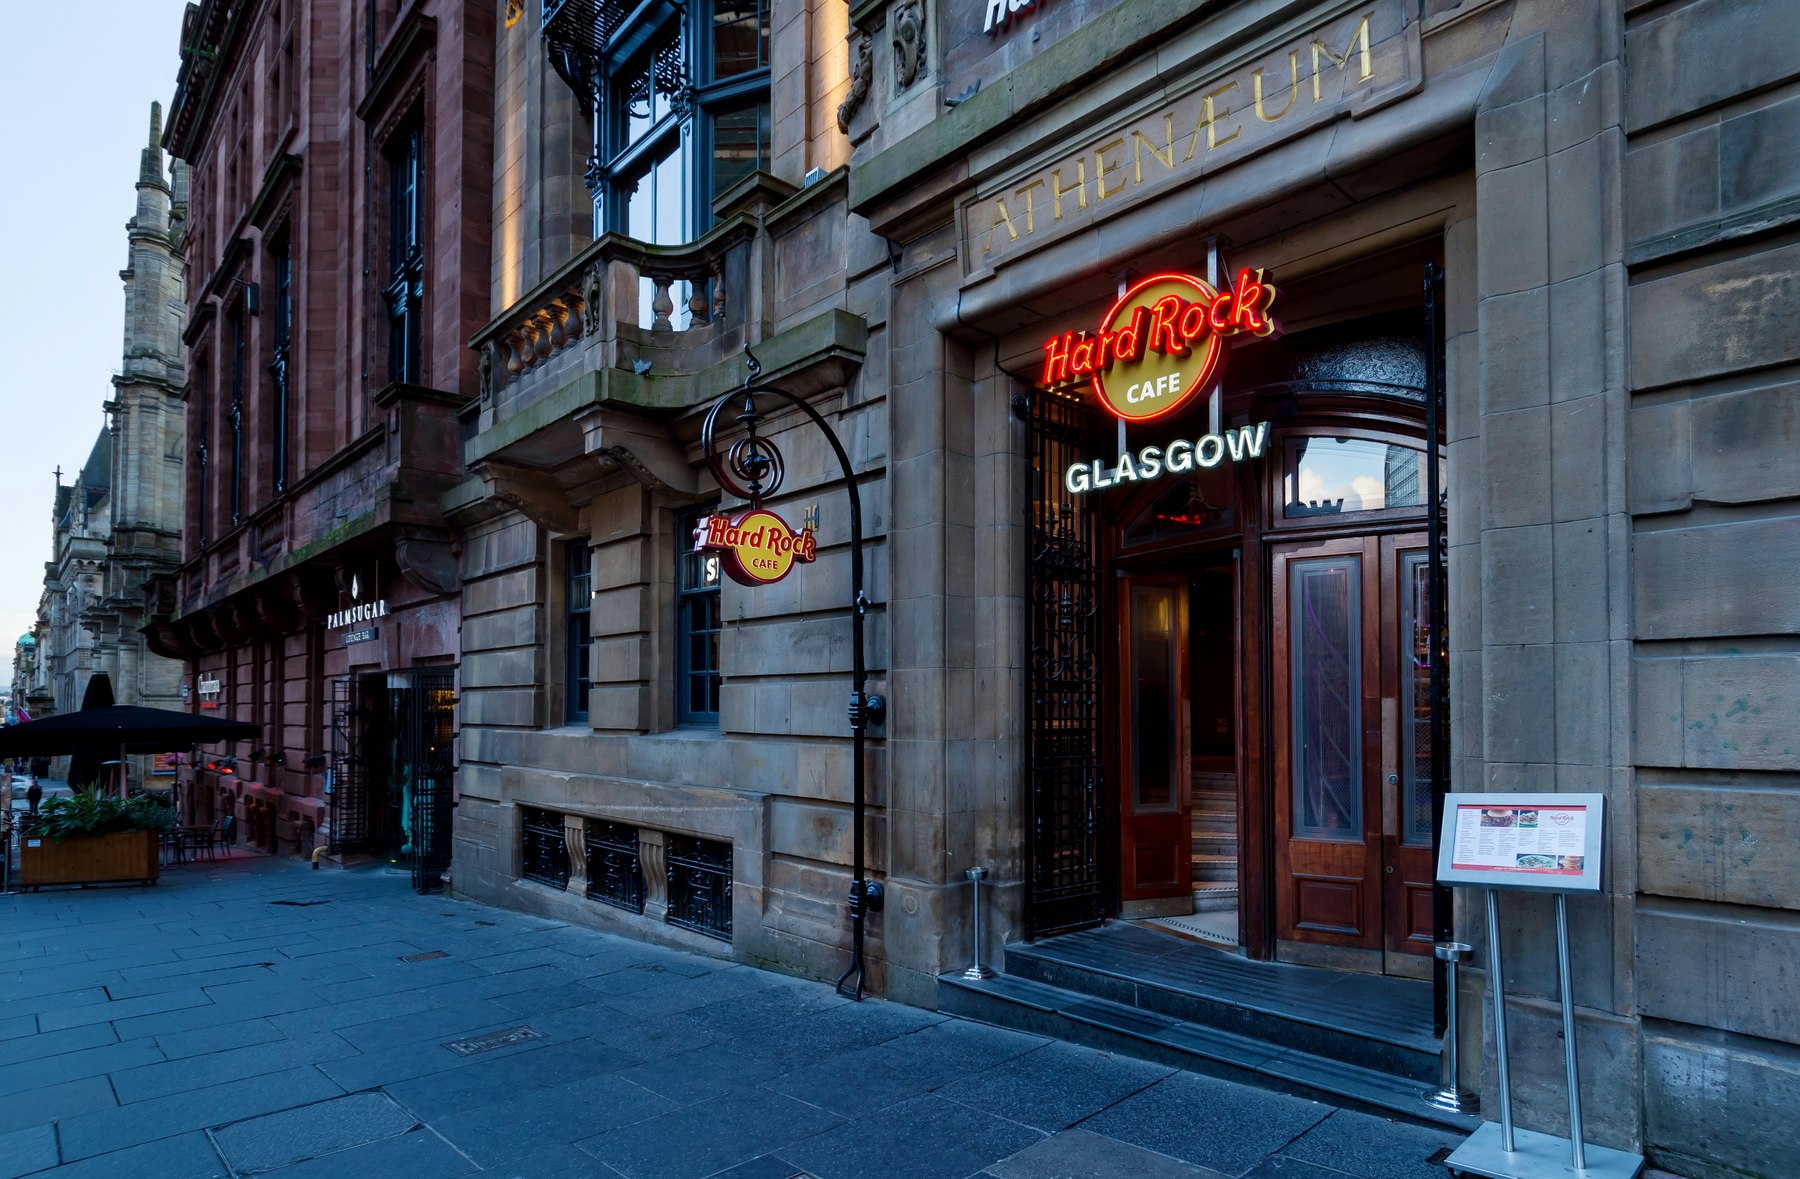 Hard Rock Cafe Glasgow - Cocktail Lounge & Pool Hall image 1